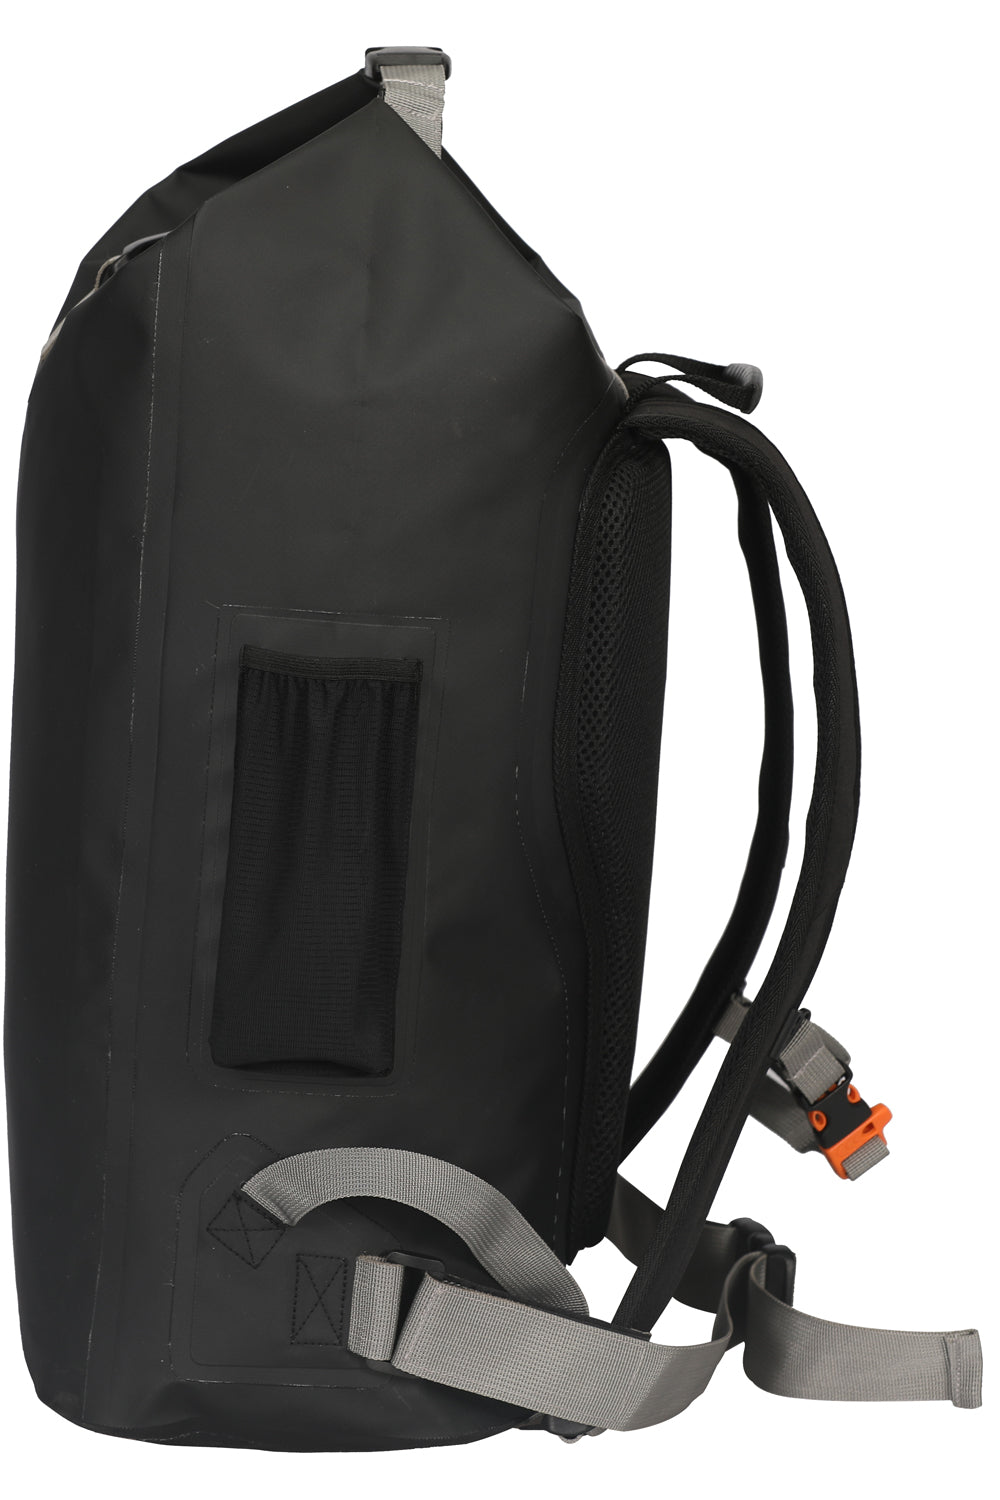 Sundried Waterproof Backpack Bags SD0399 Activewear